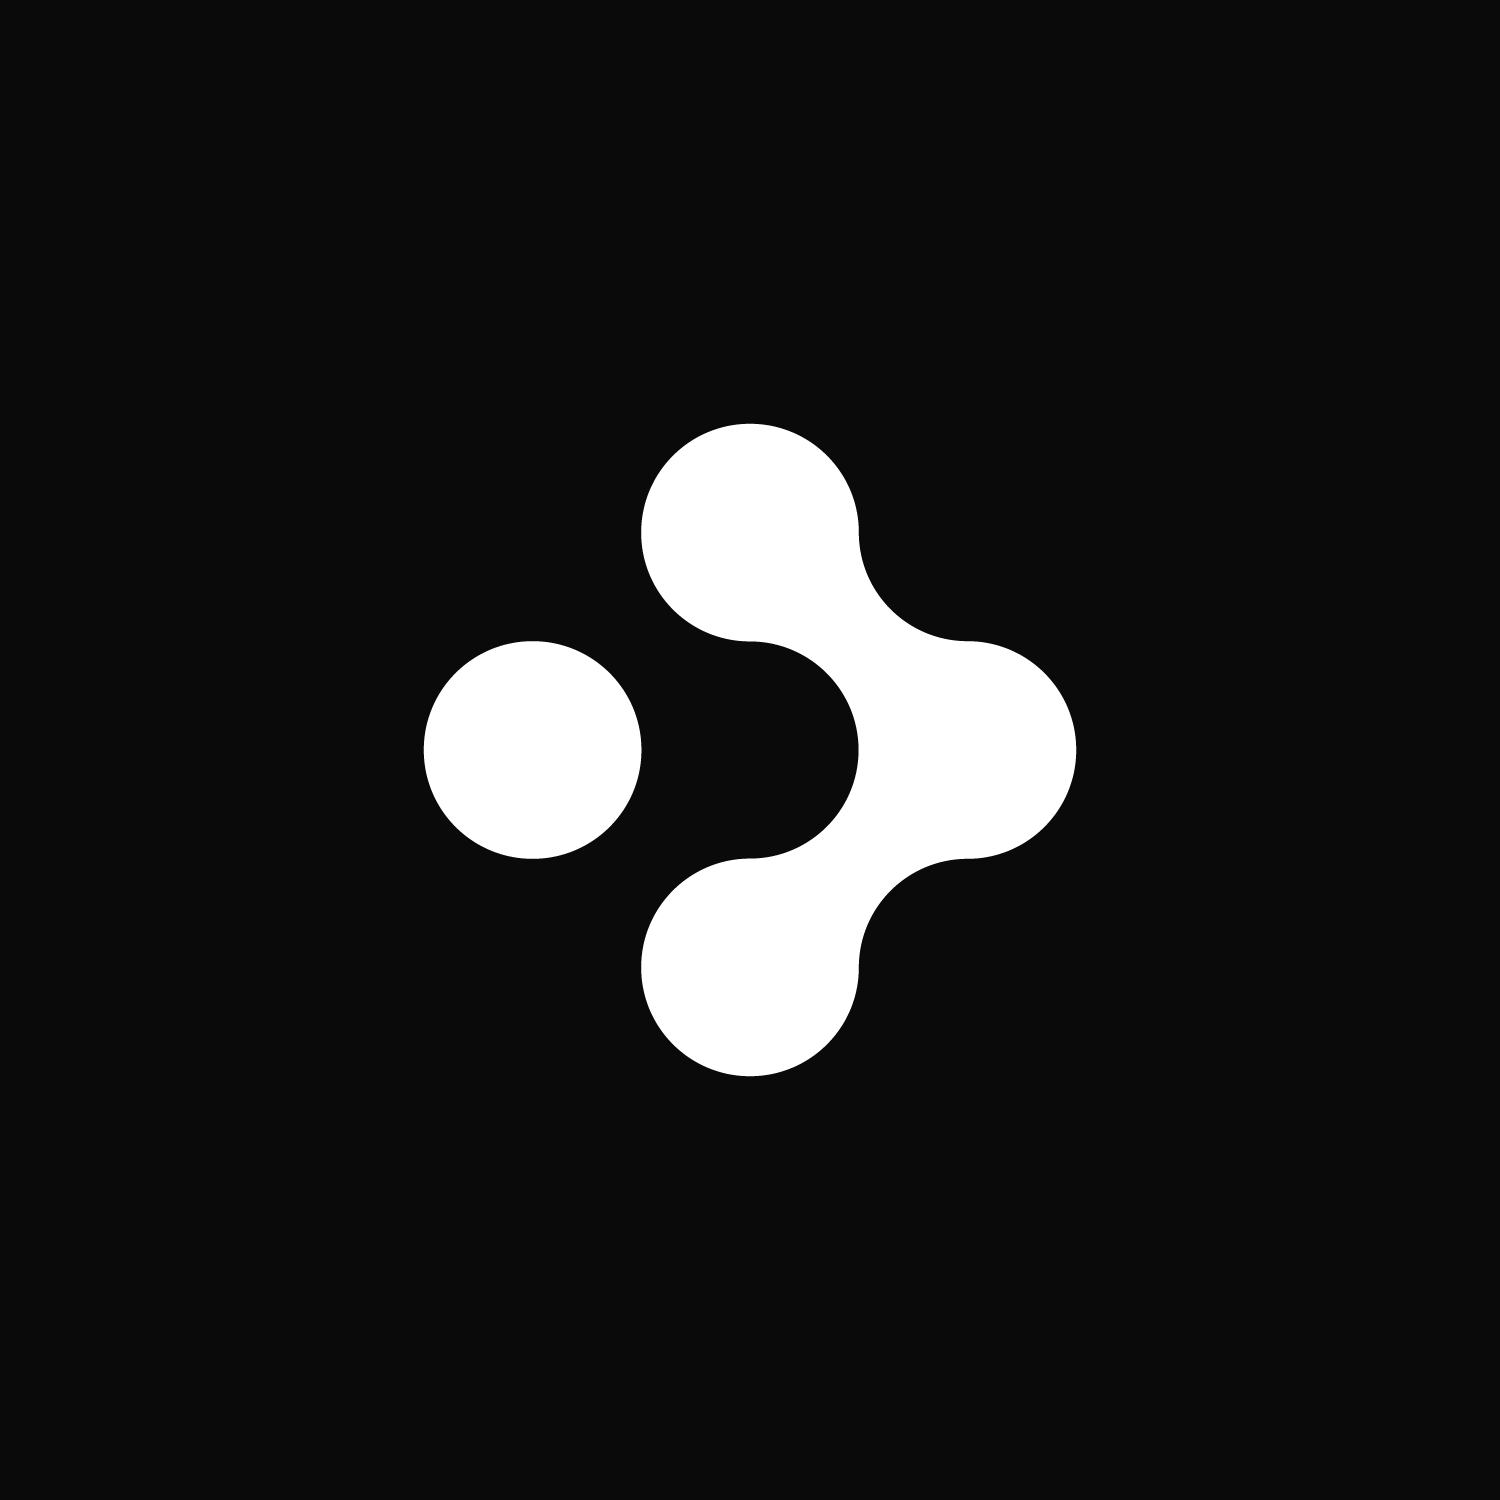 White Bolt symbol on a black background